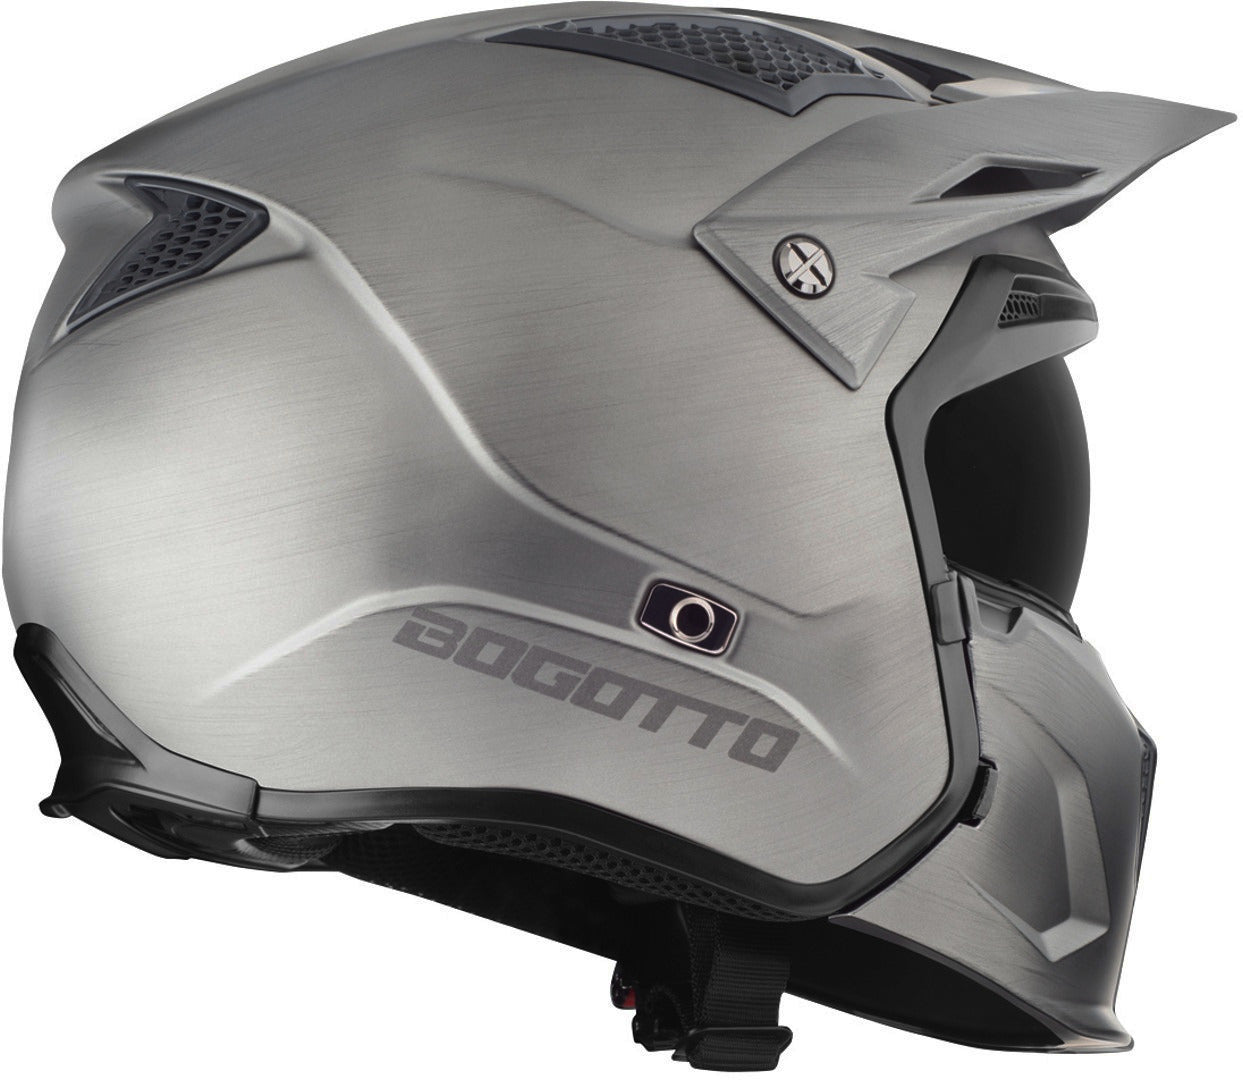 Bogotto Radic Helmet#color_titan-matt